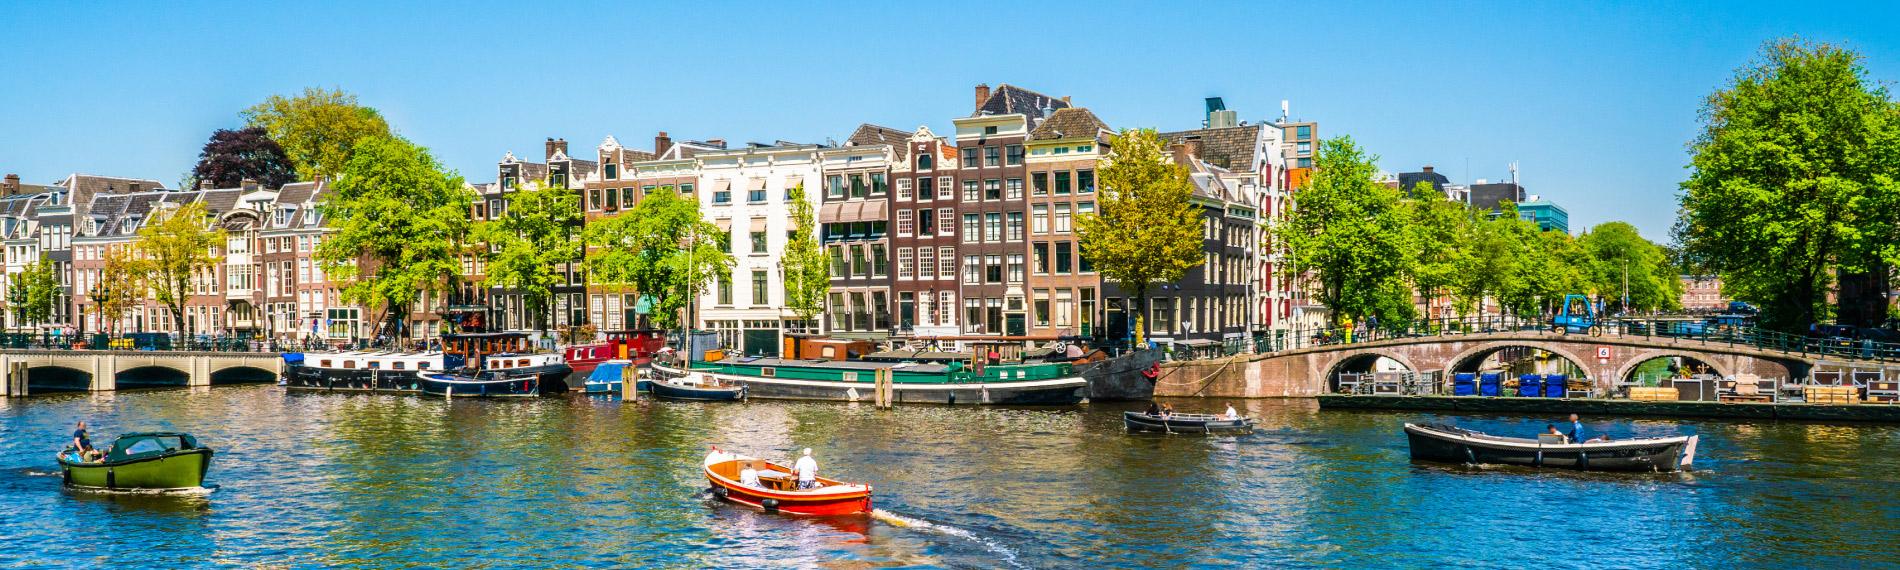 Amsterdam Holidays & City Breaks